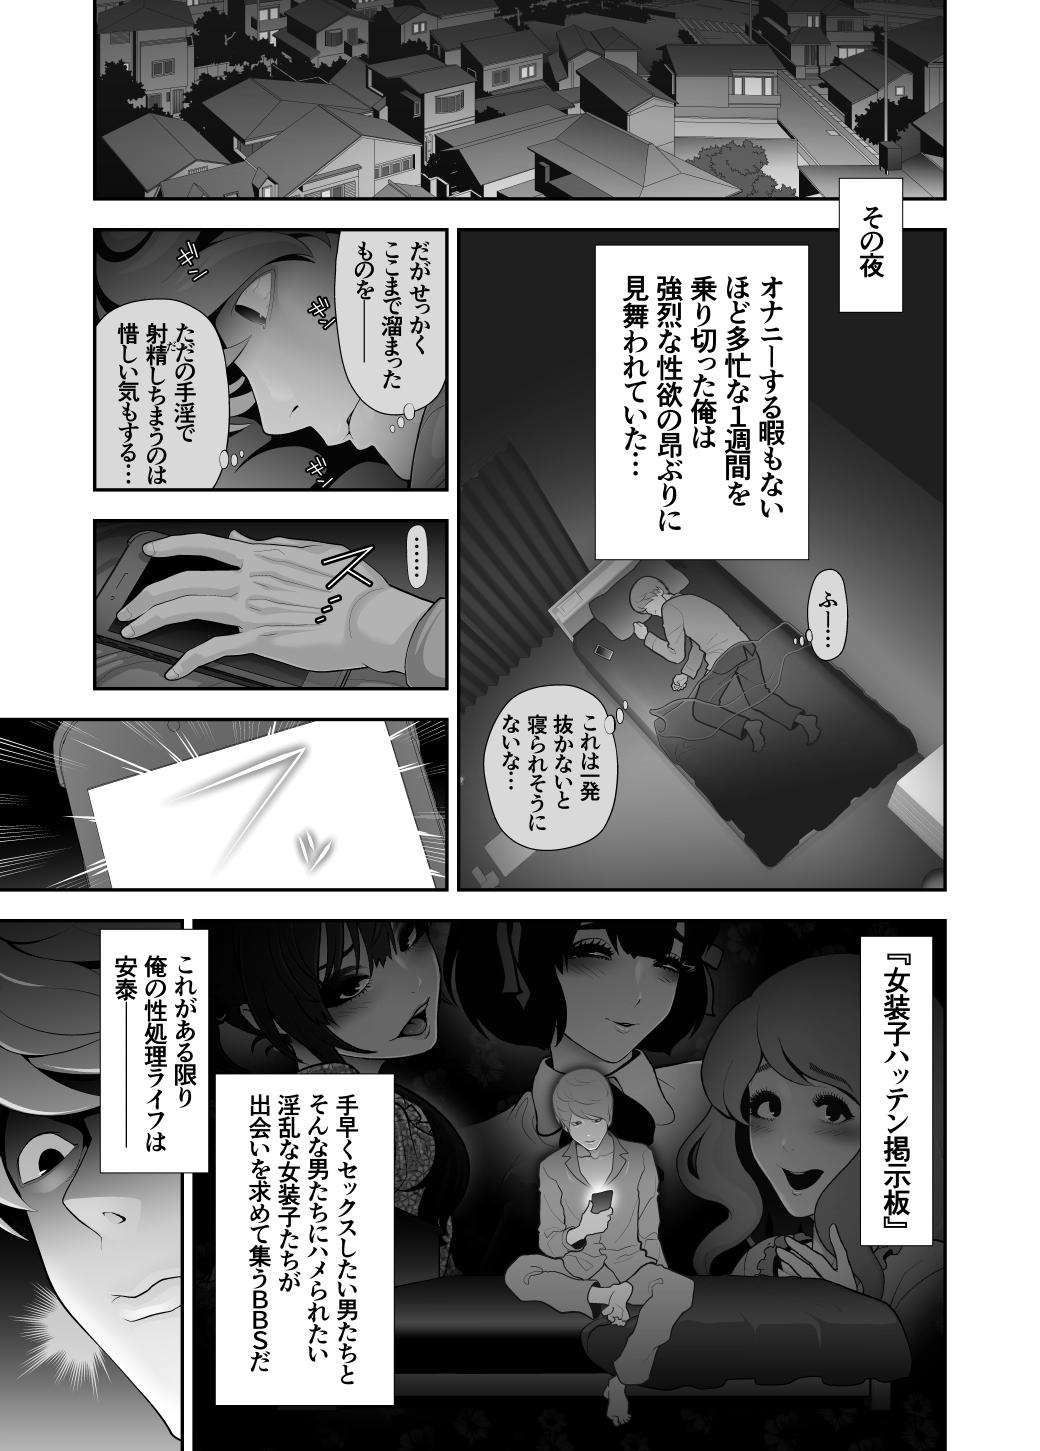 18 Year Old 女装子ハッテン系 ≪ ド○キ屋上 篇 ≫ Morocha - Page 3